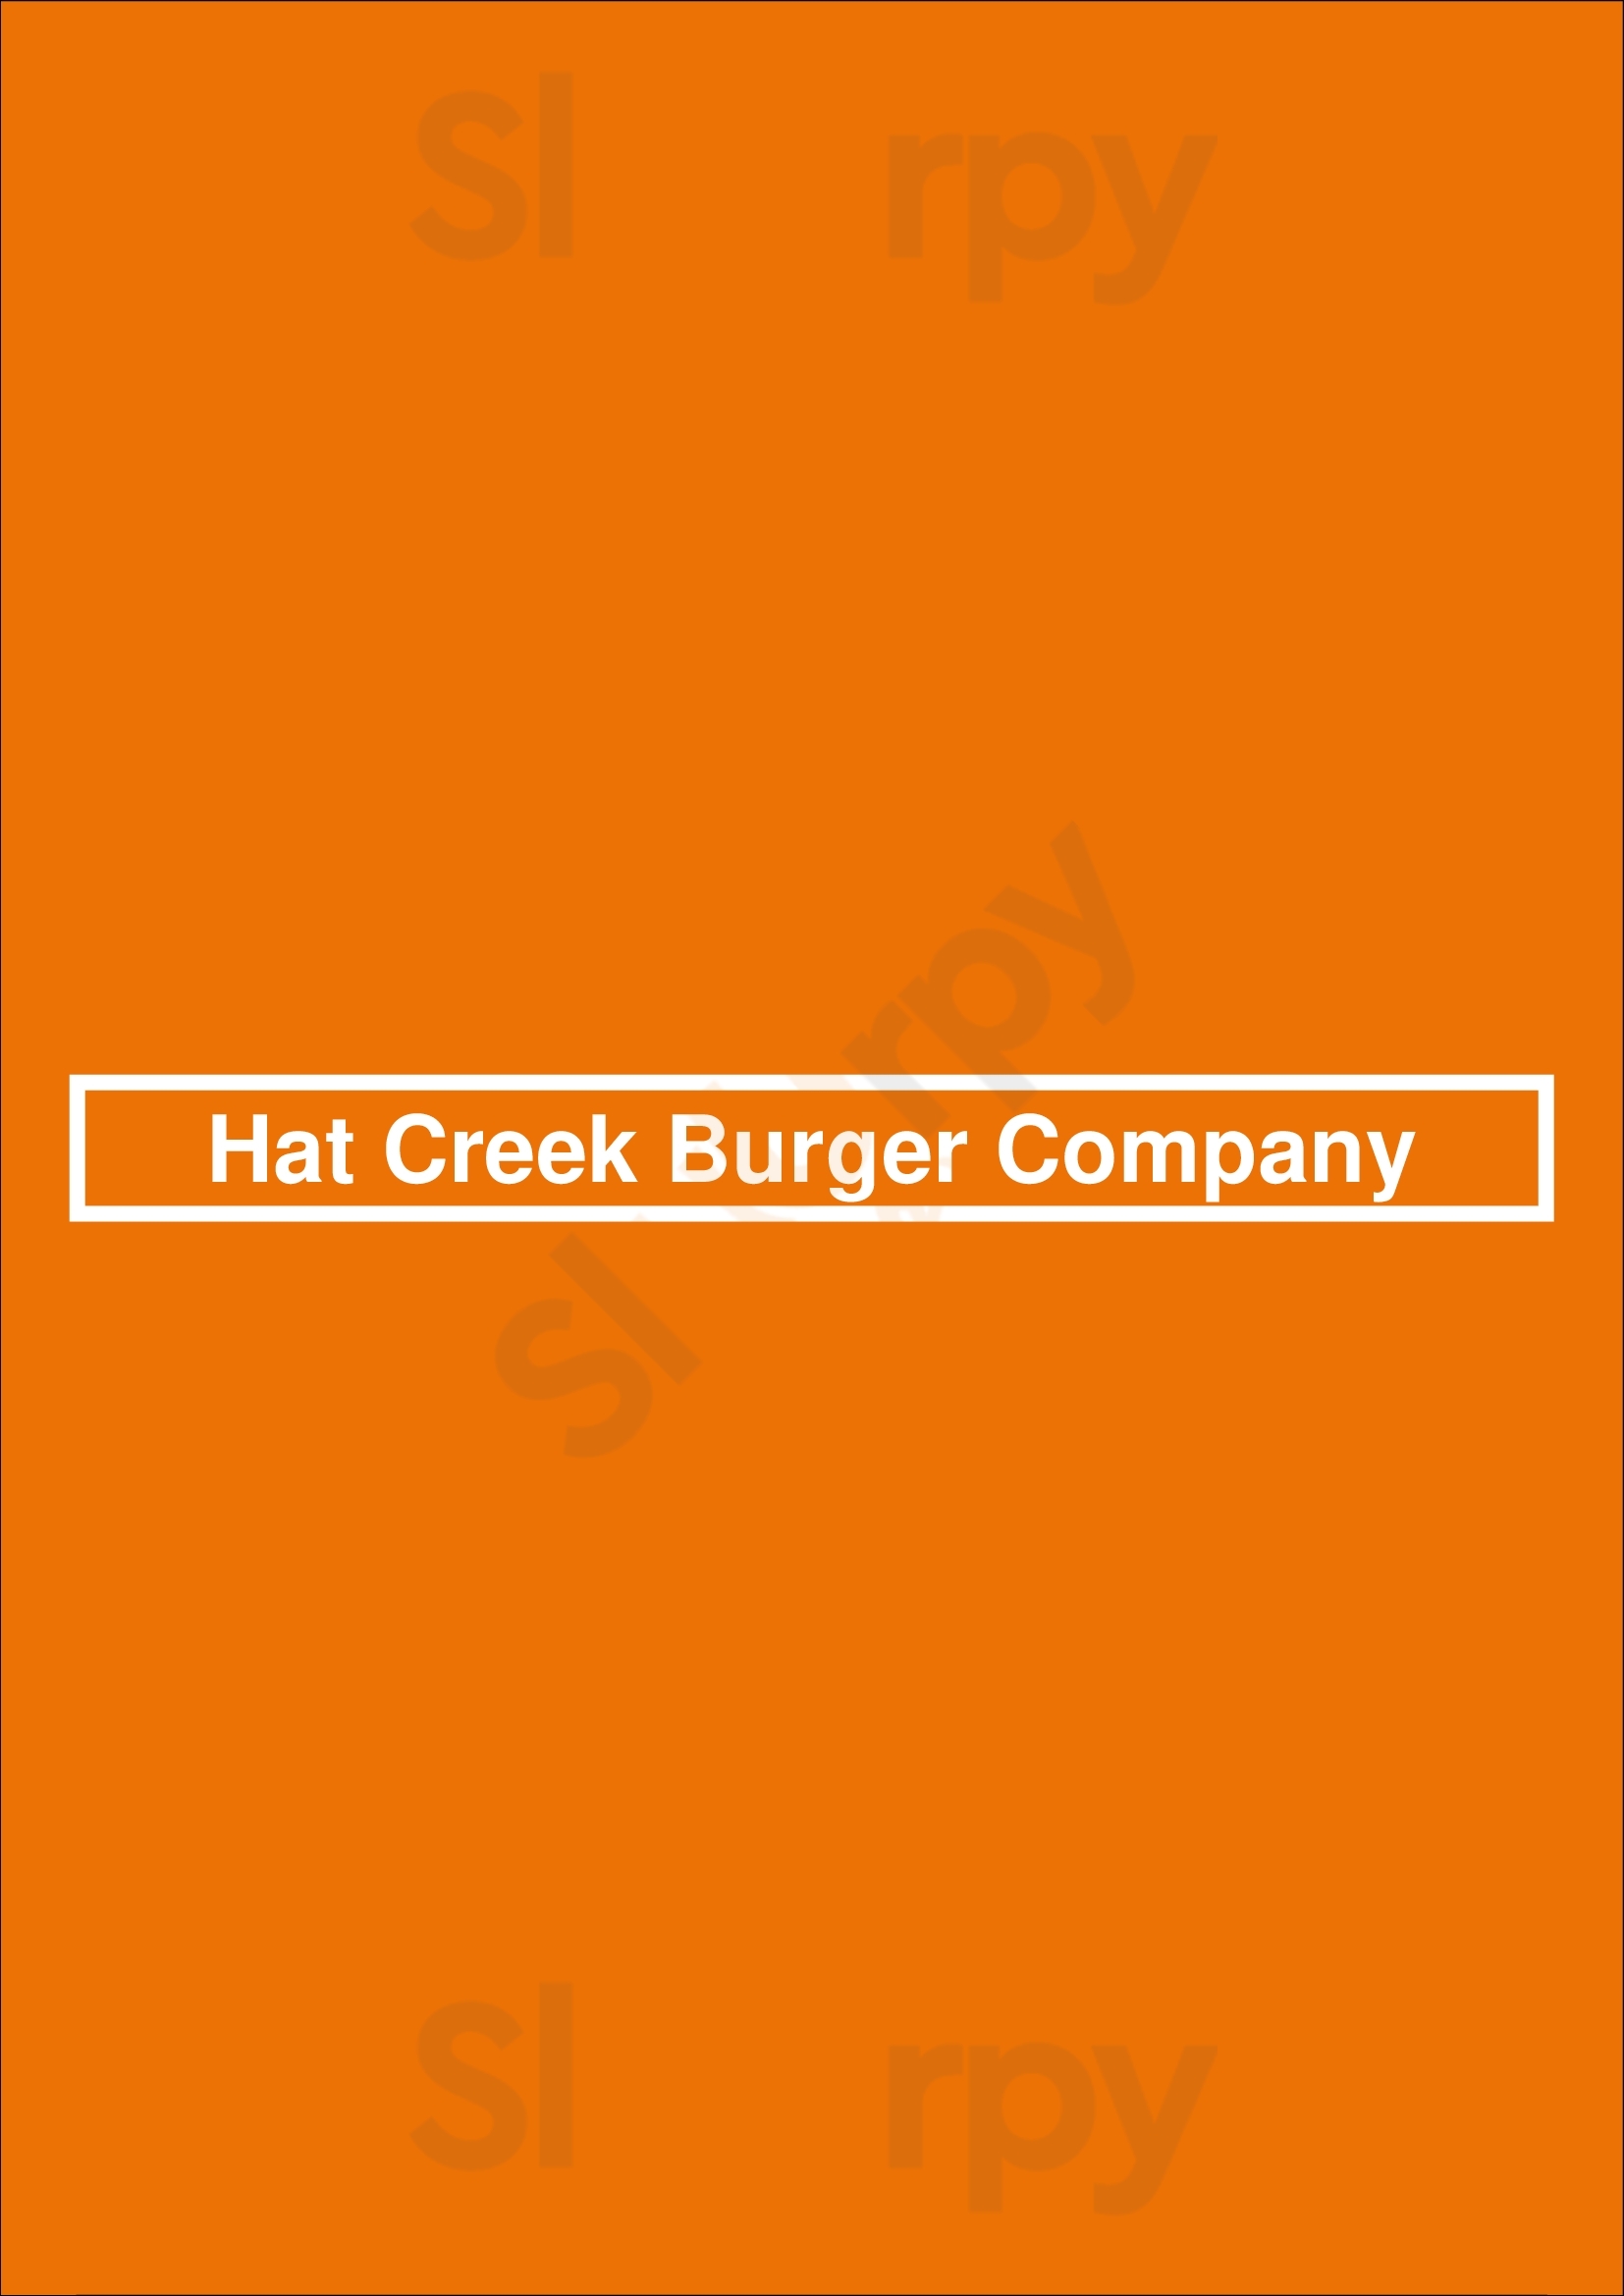 Hat Creek Burger Company Dallas Menu - 1